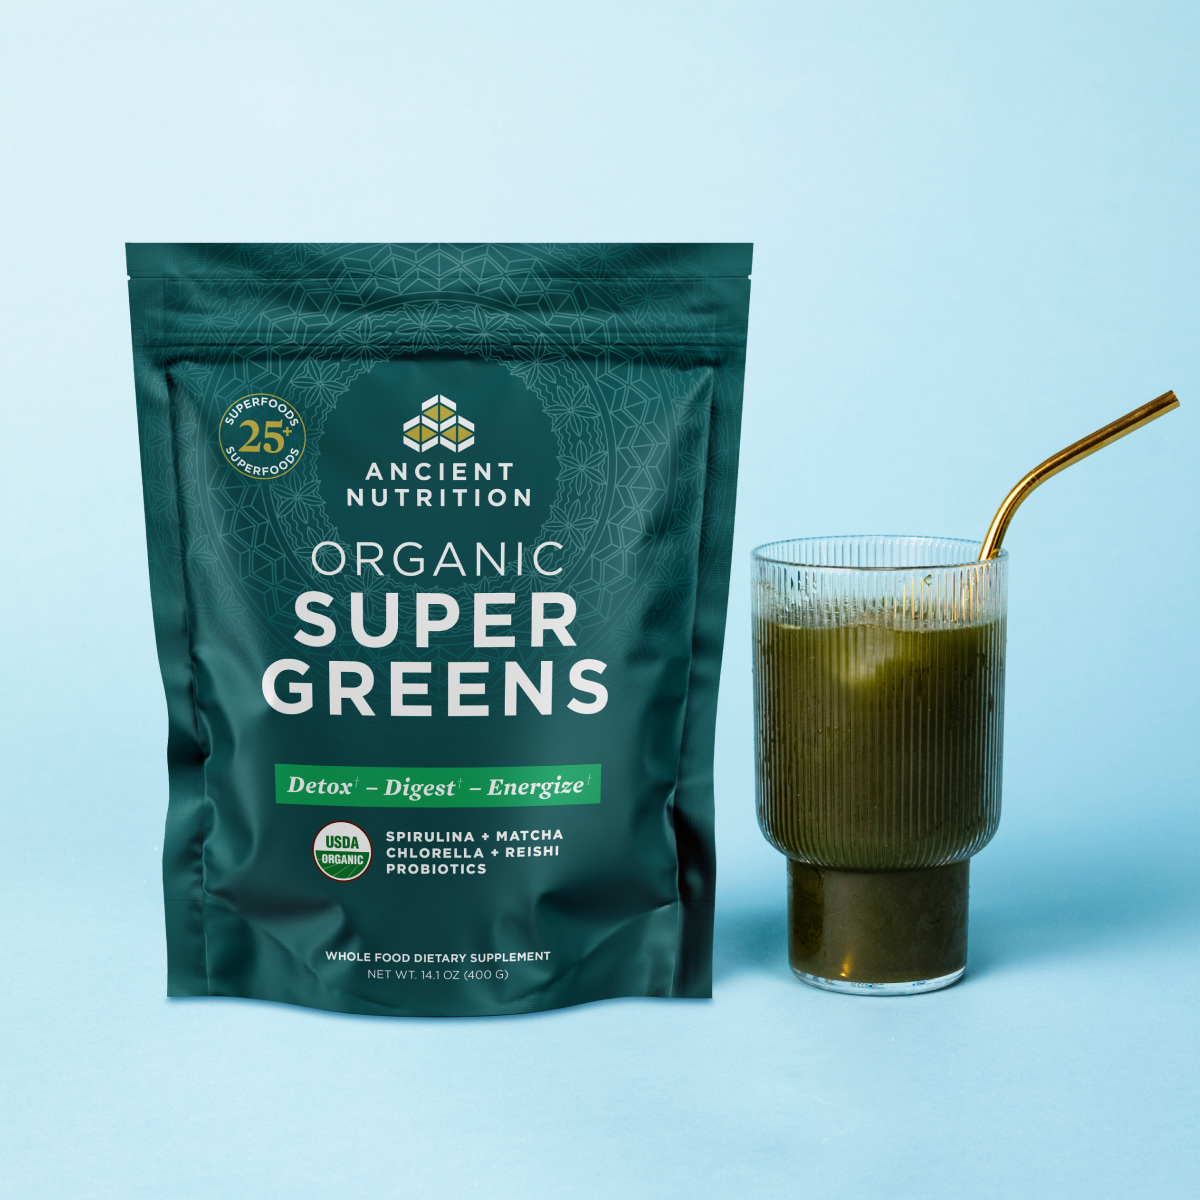 supergreens bag next to a glass of greens